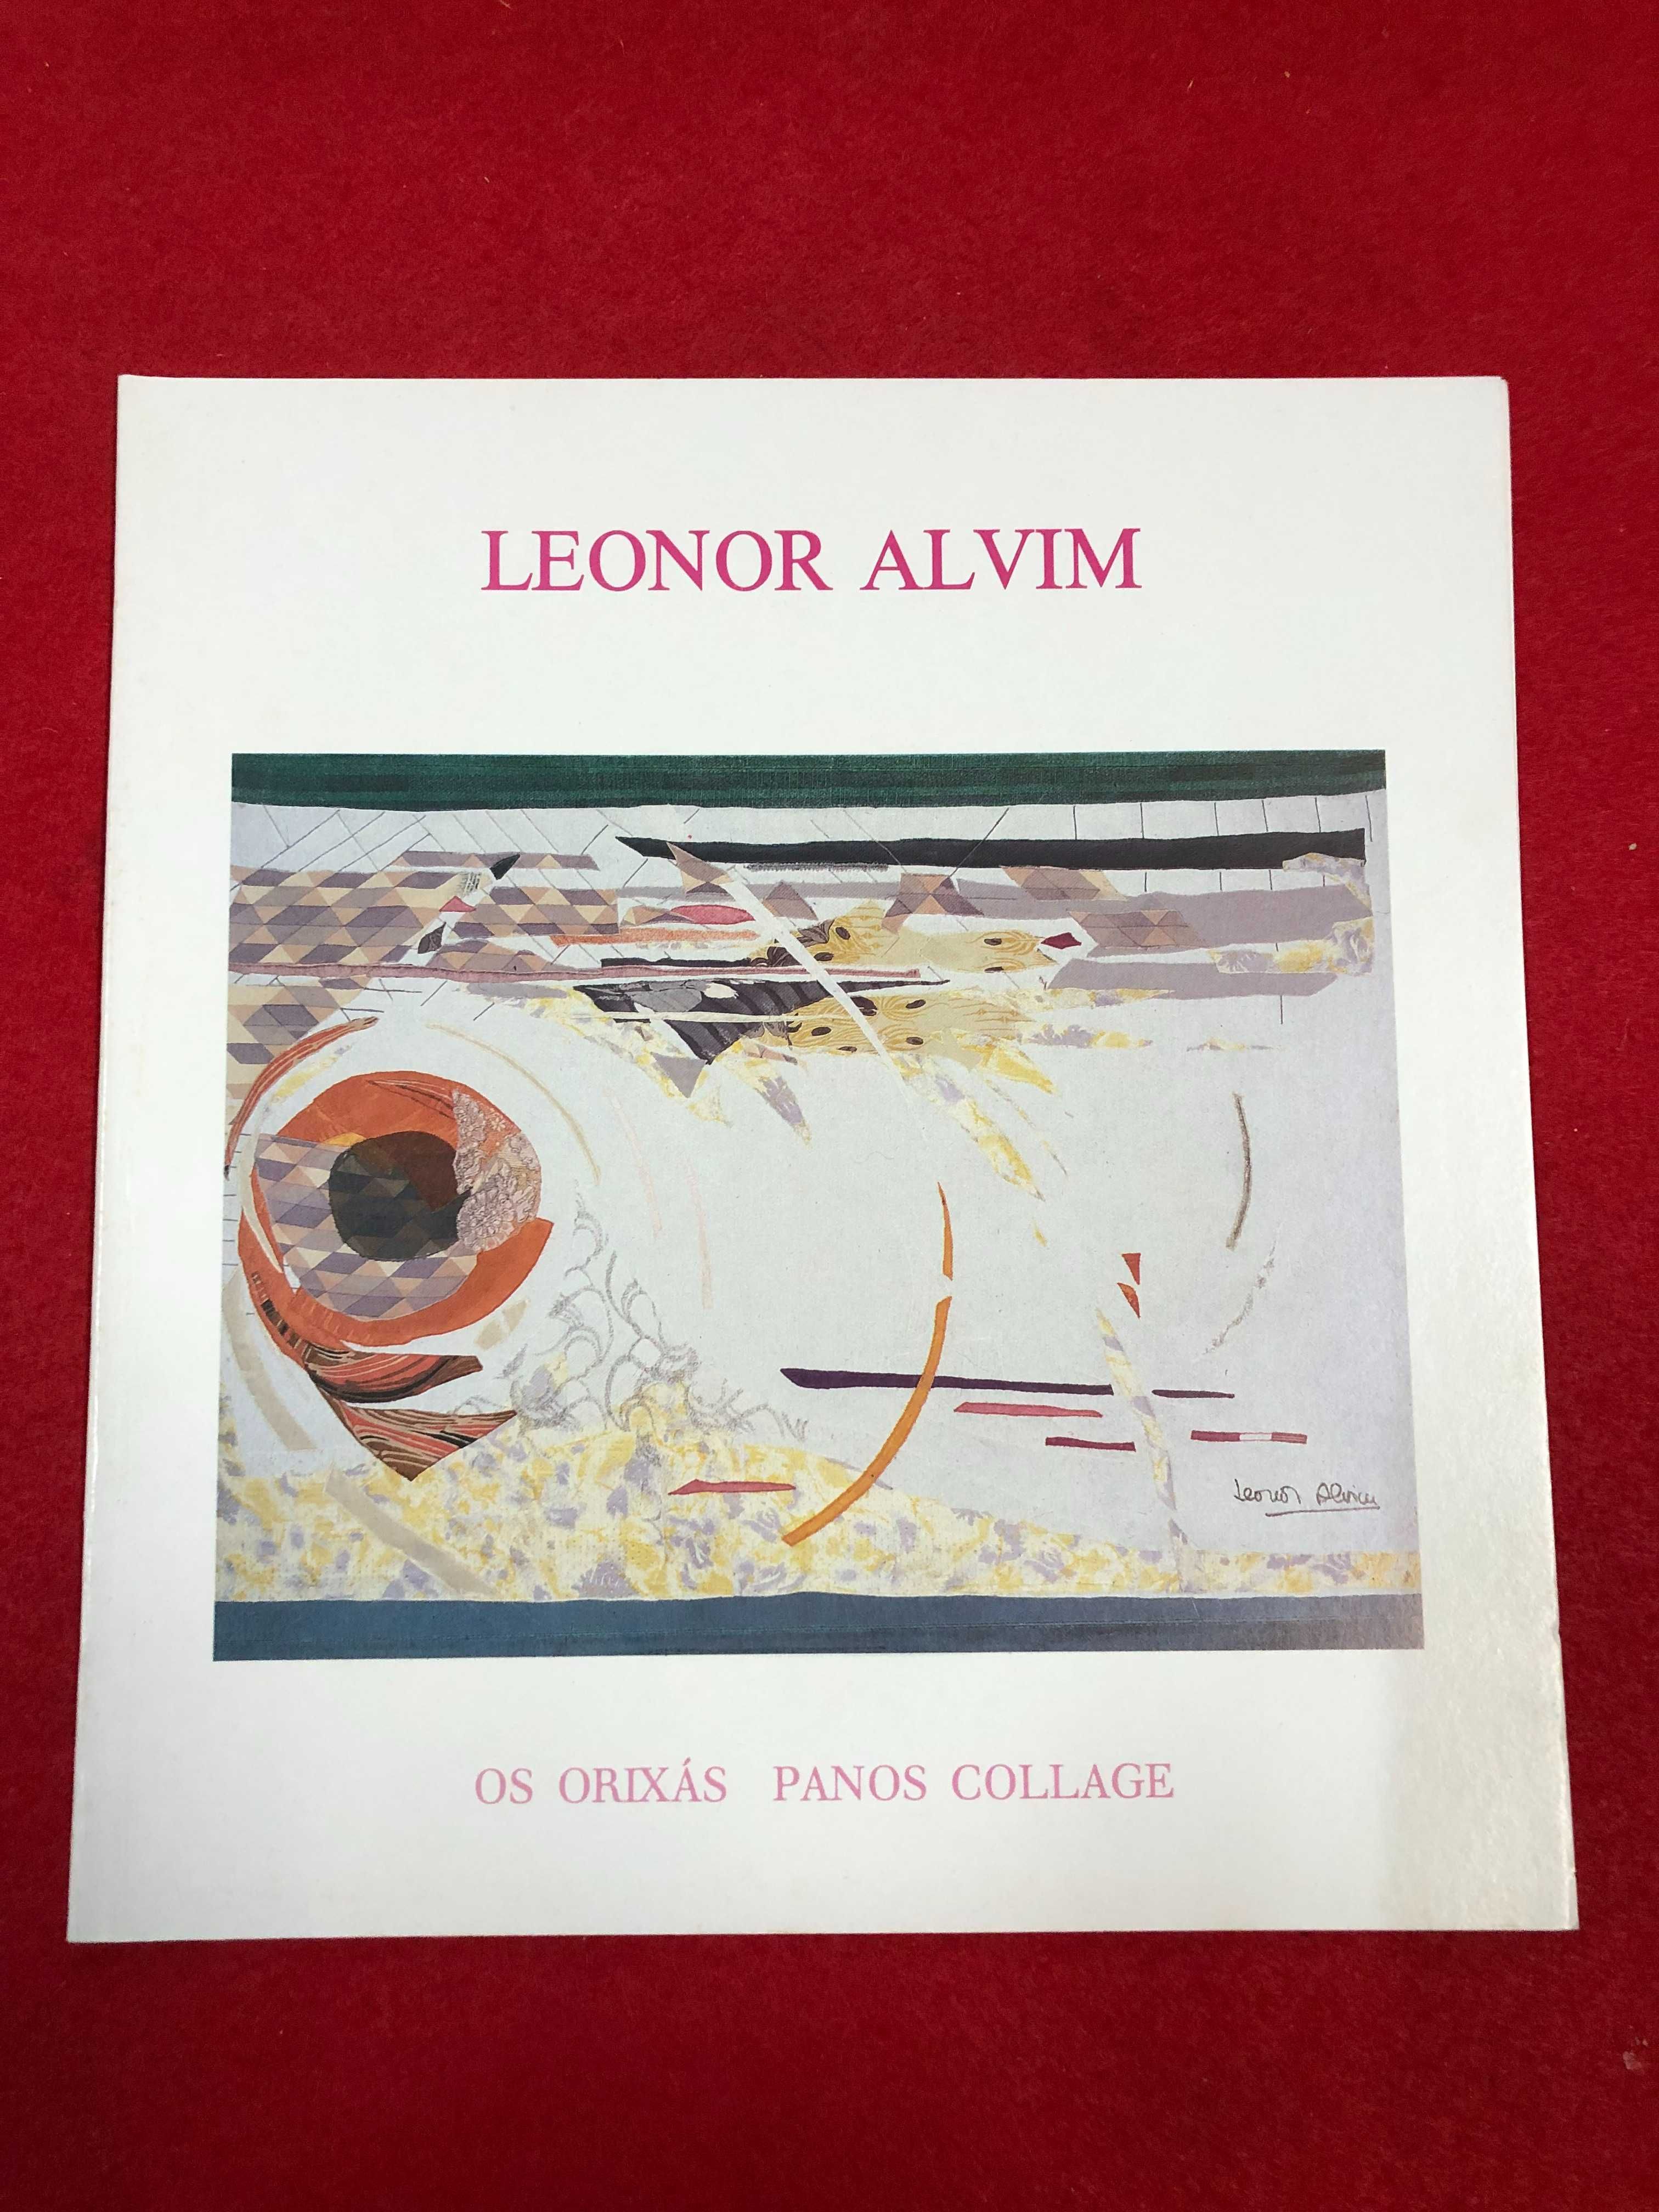 Leonor Alvim – Os orixás panos collage